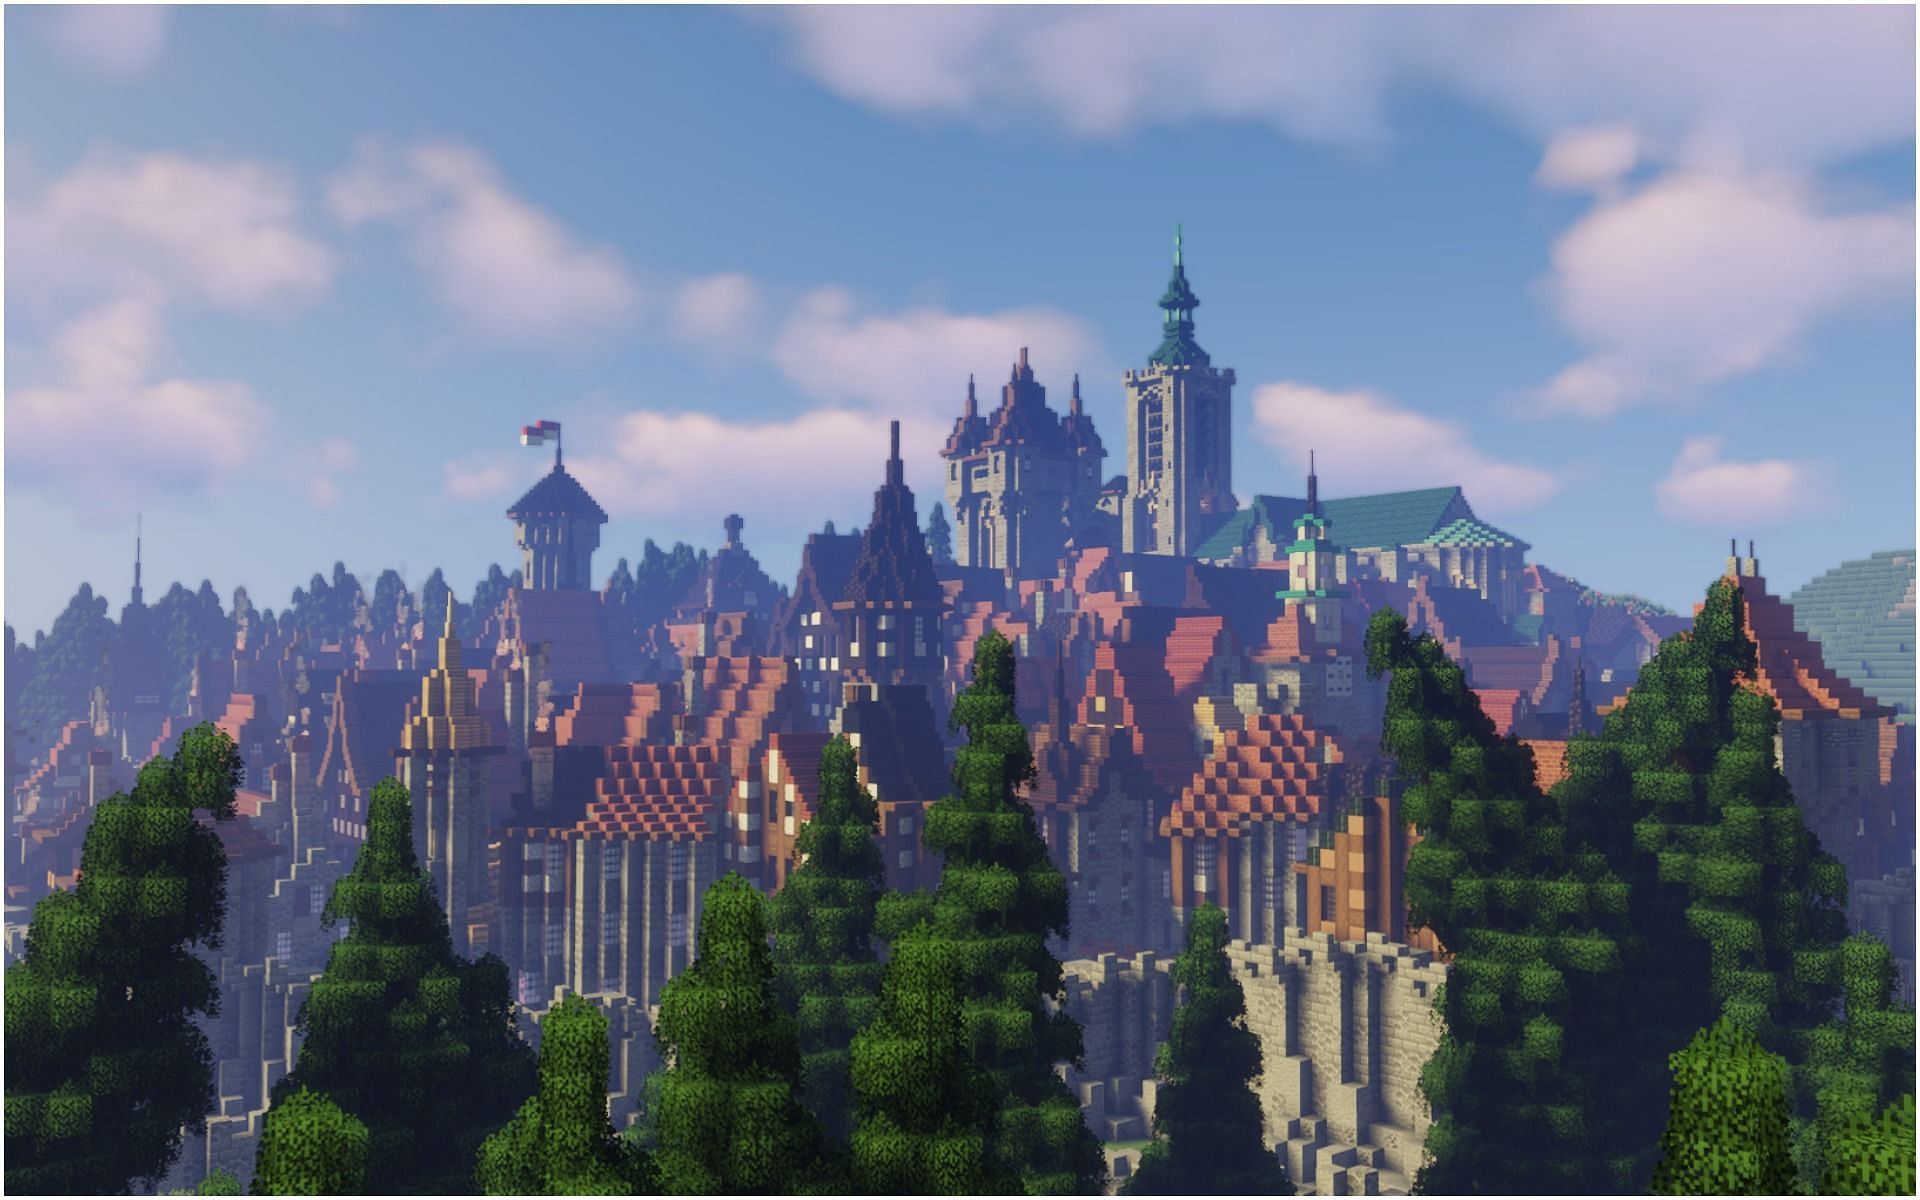 minecraft medieval city